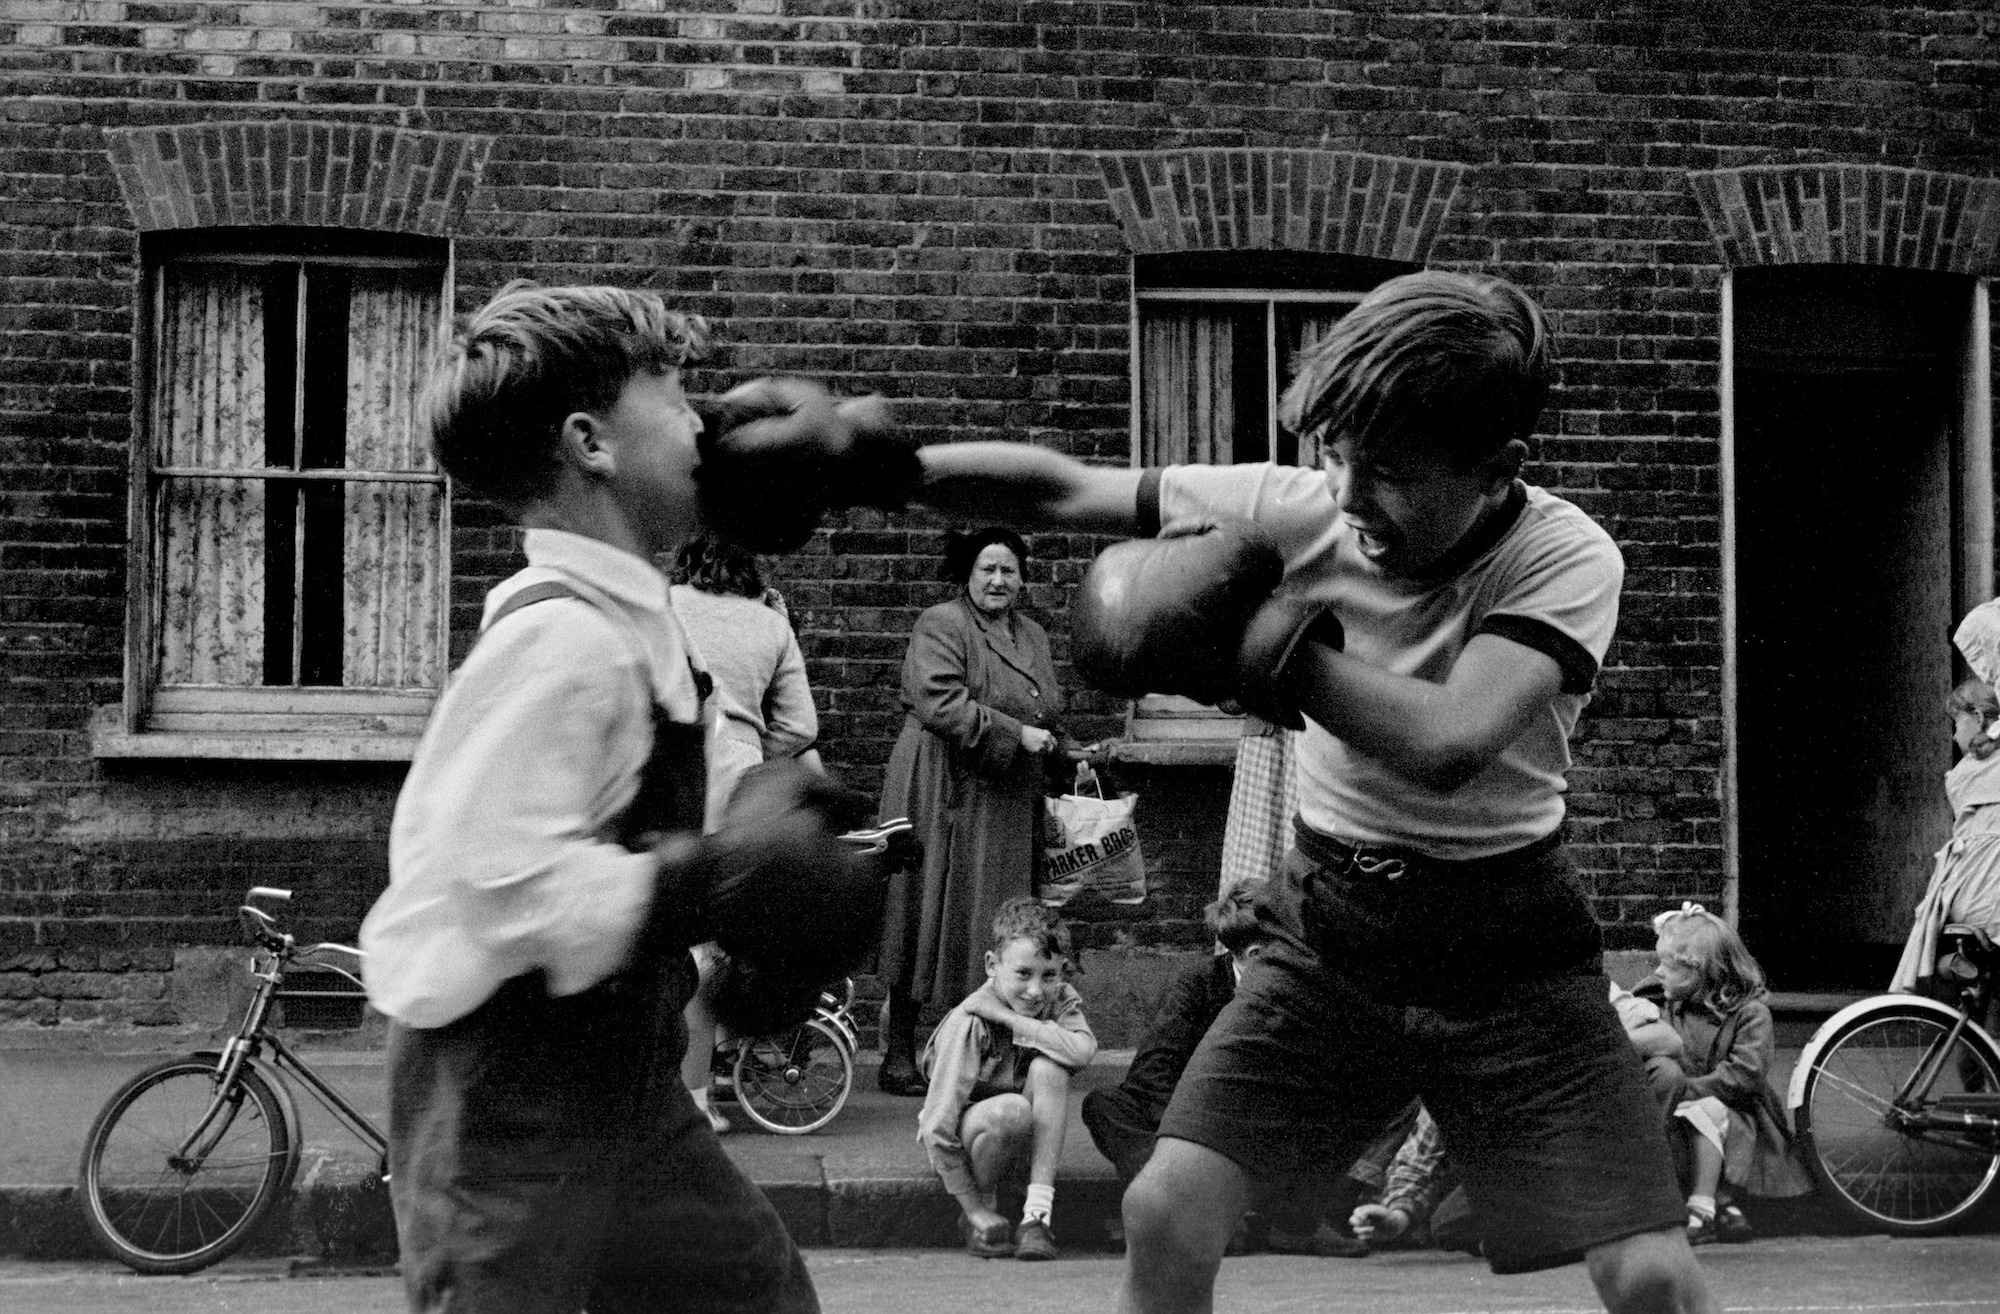 Boxing match between children, Lambeth, London, England, 1955. © Frank Horvat